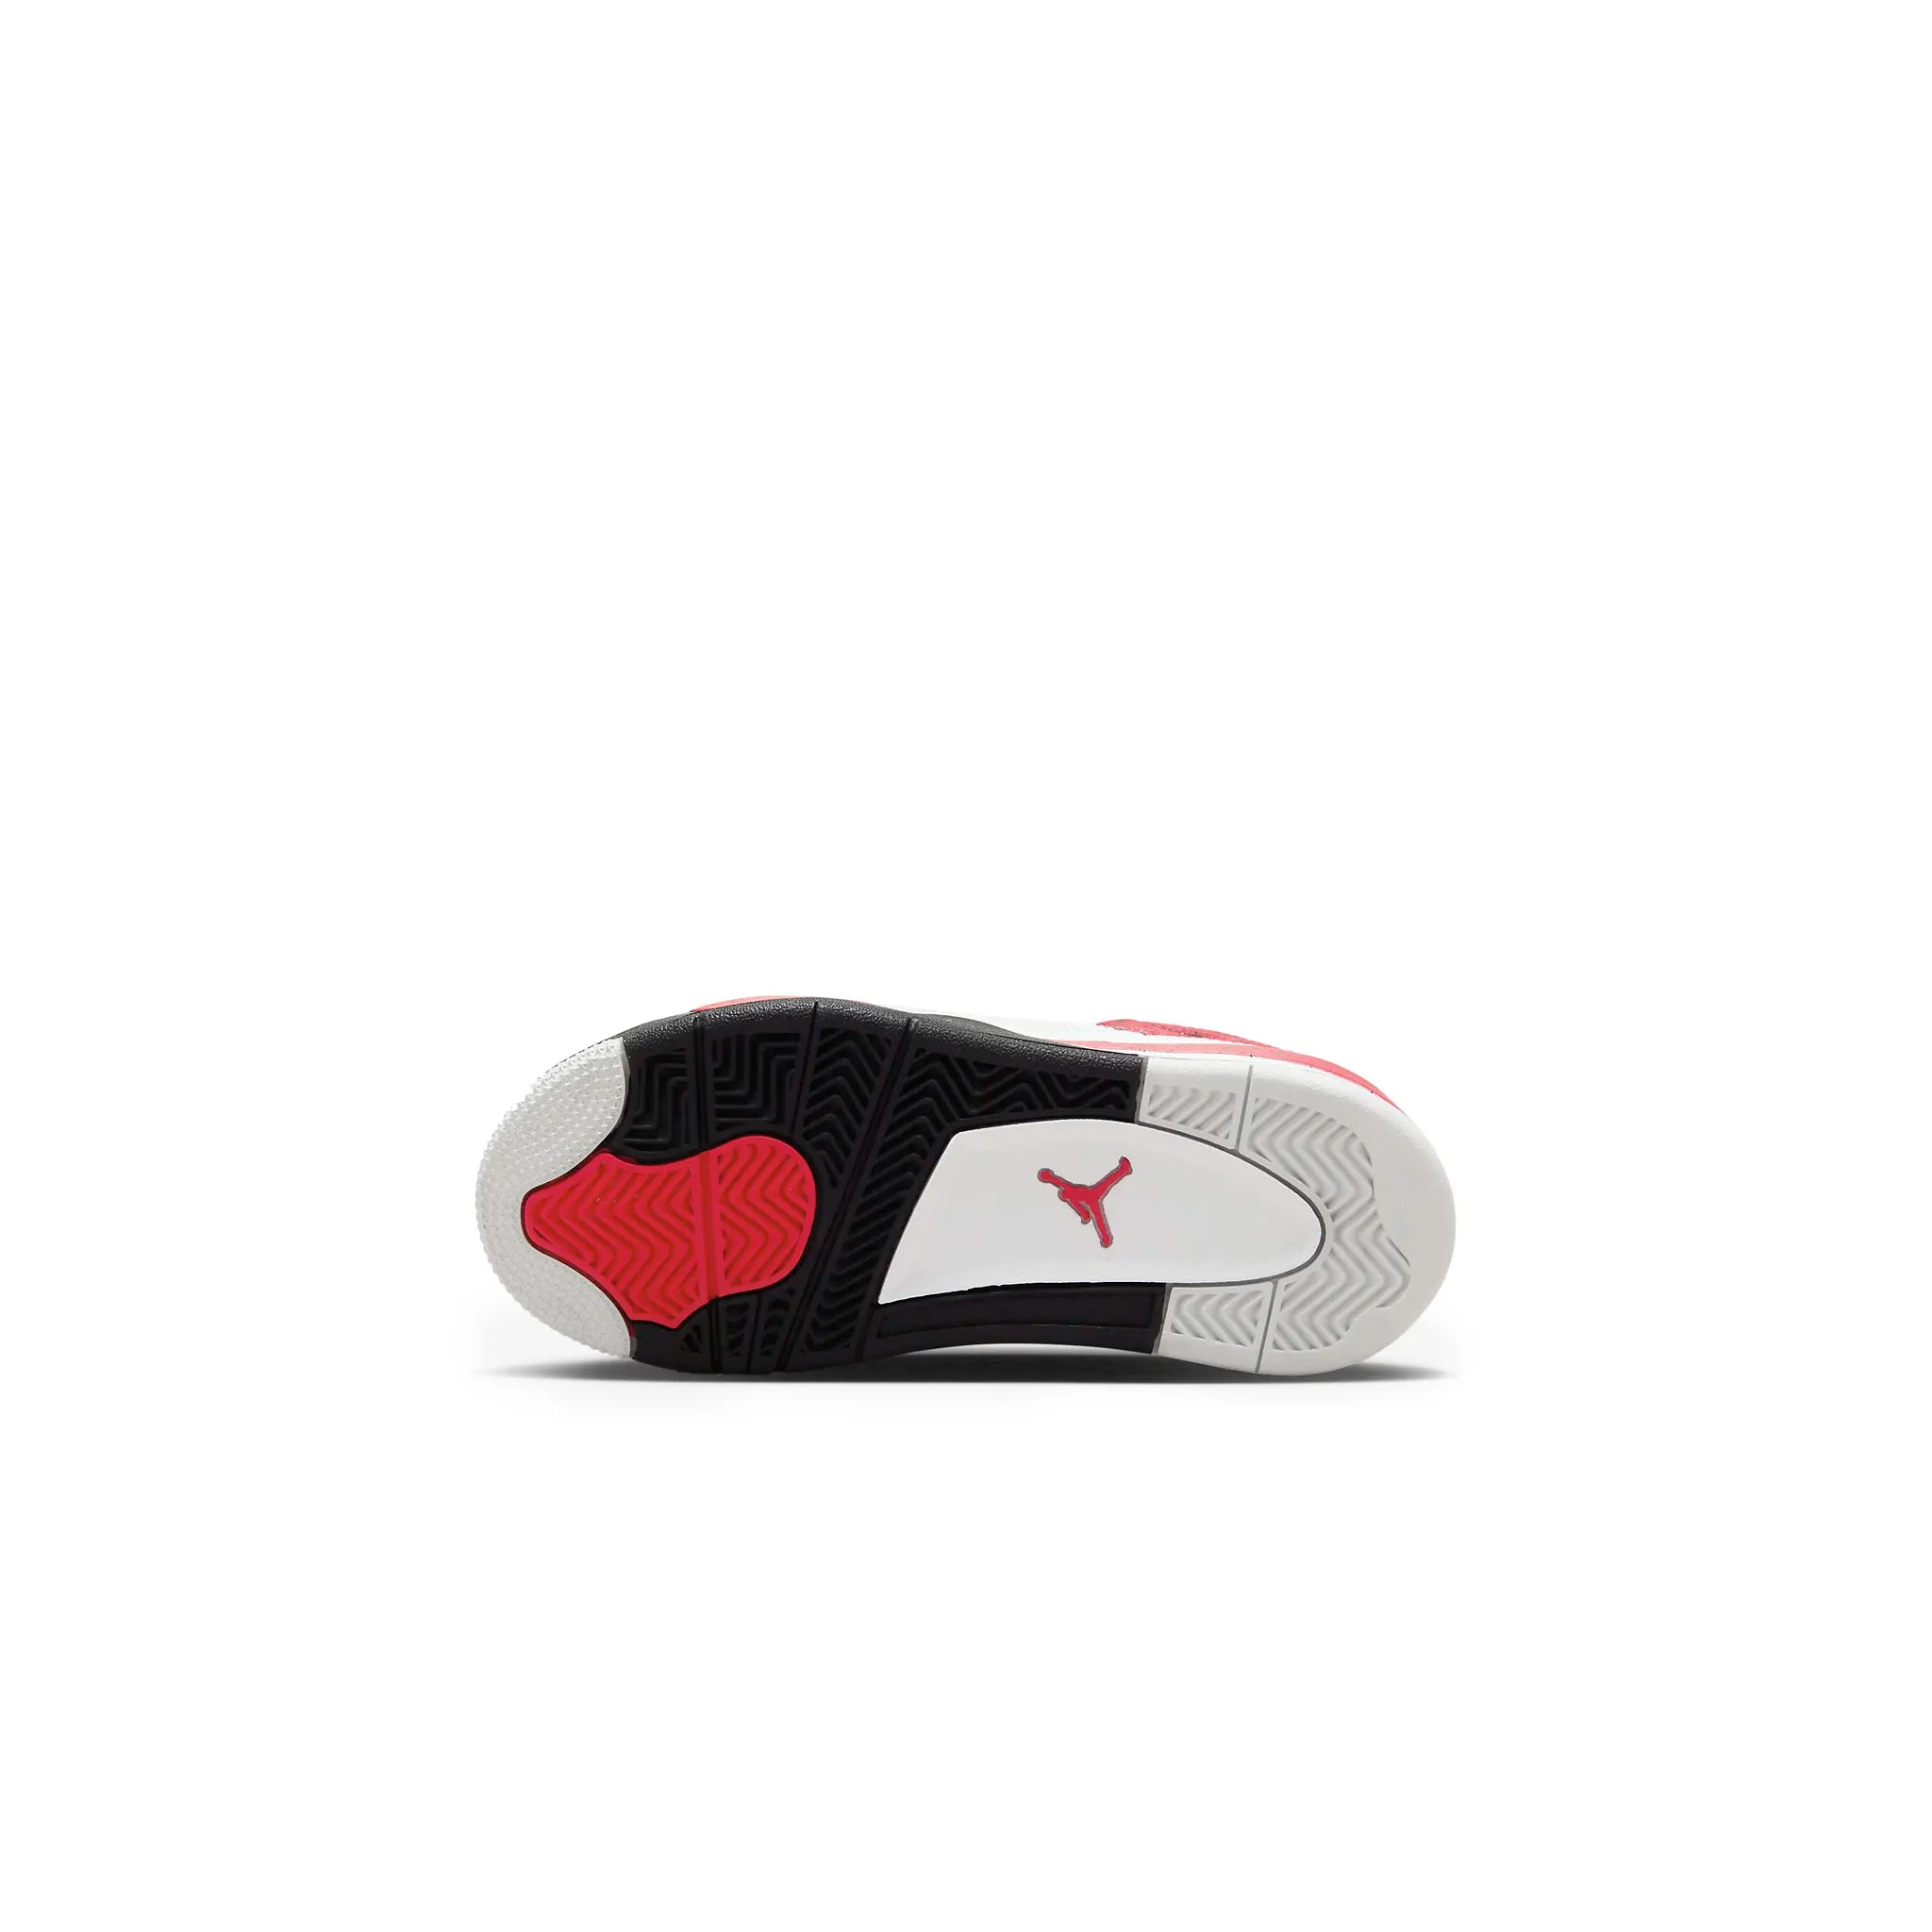 Sole view of Air Jordan 4 Retro Red Cement (PS) BQ7669-161